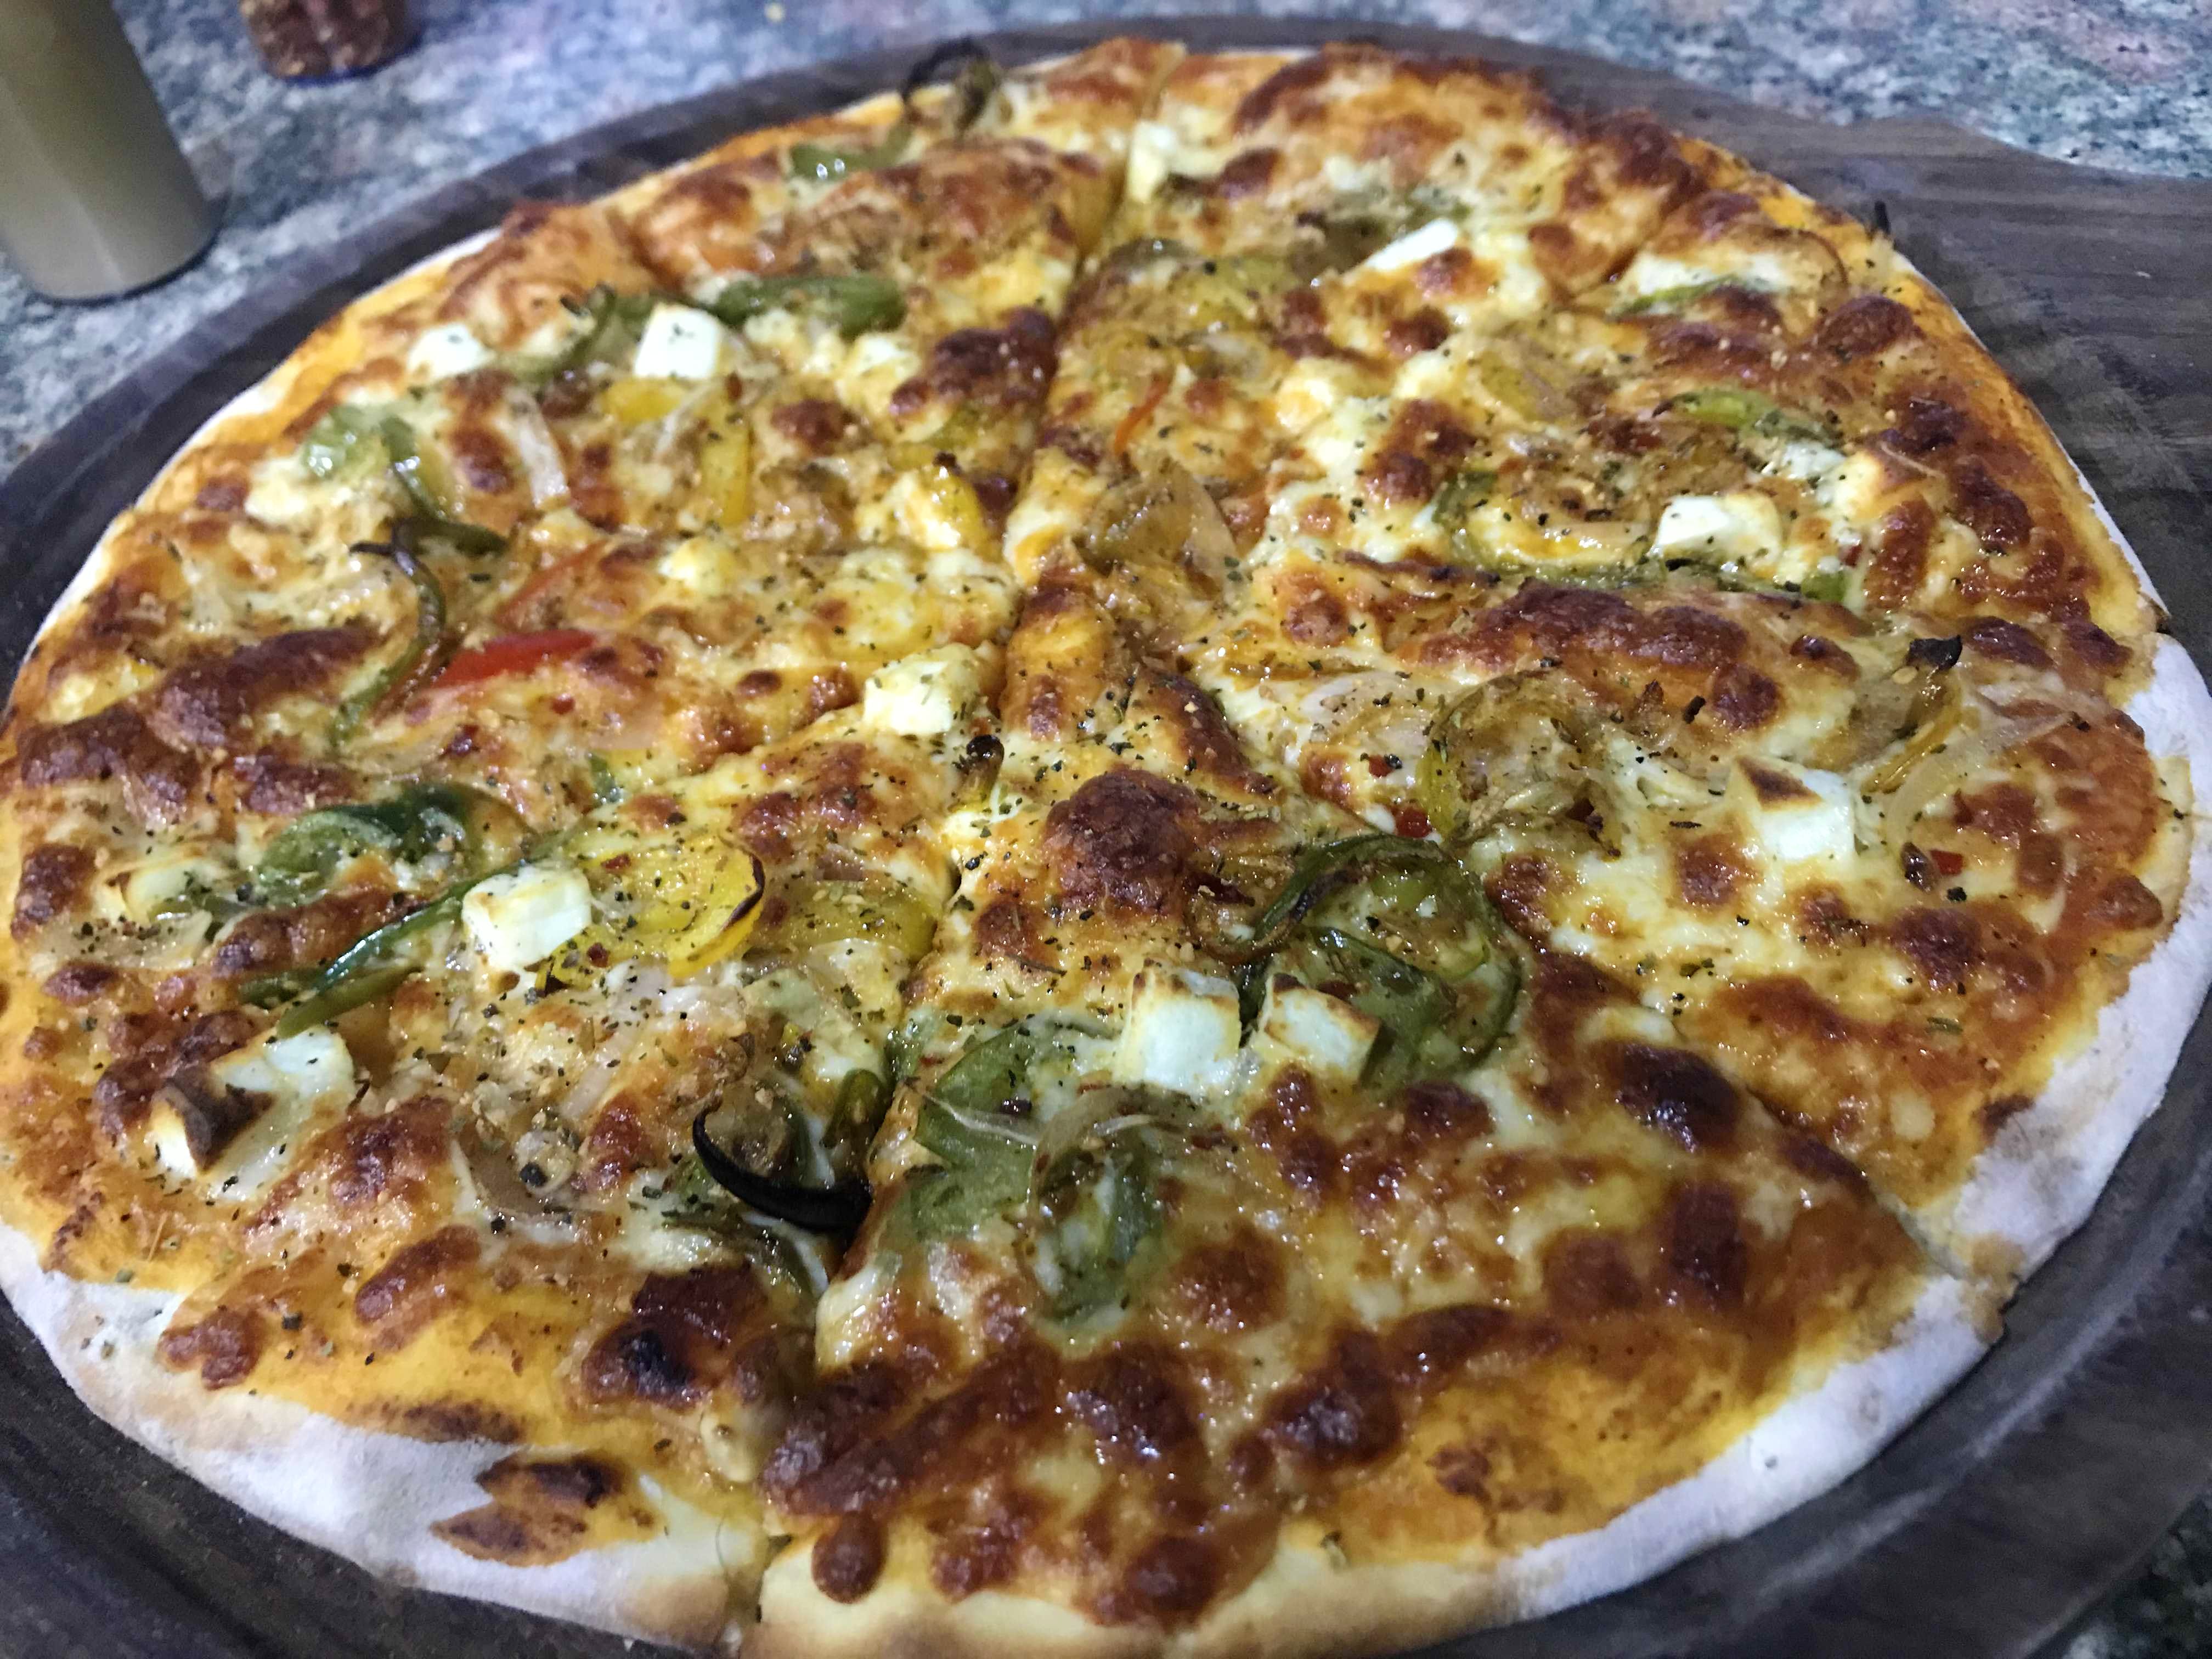 Dish,Food,Cuisine,Pizza,California-style pizza,Pizza cheese,Ingredient,Tarte flambée,Sicilian pizza,Flatbread